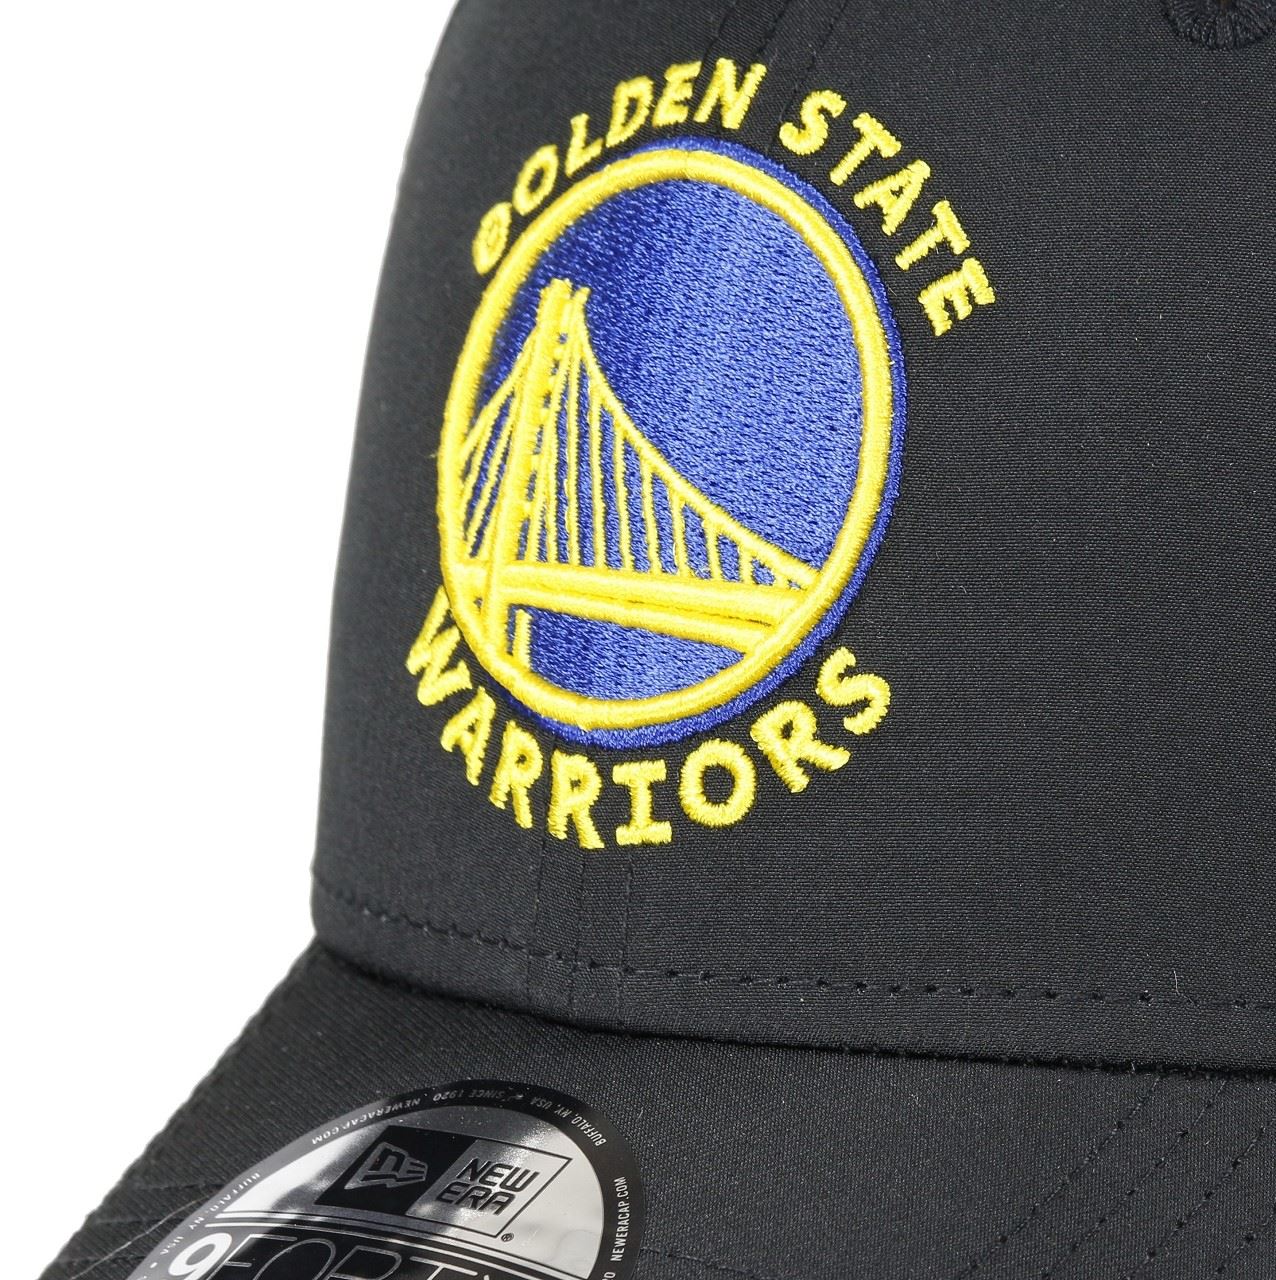 Golden State Warriors NBA Mono Tape 9Forty Adjustable Cap New Era